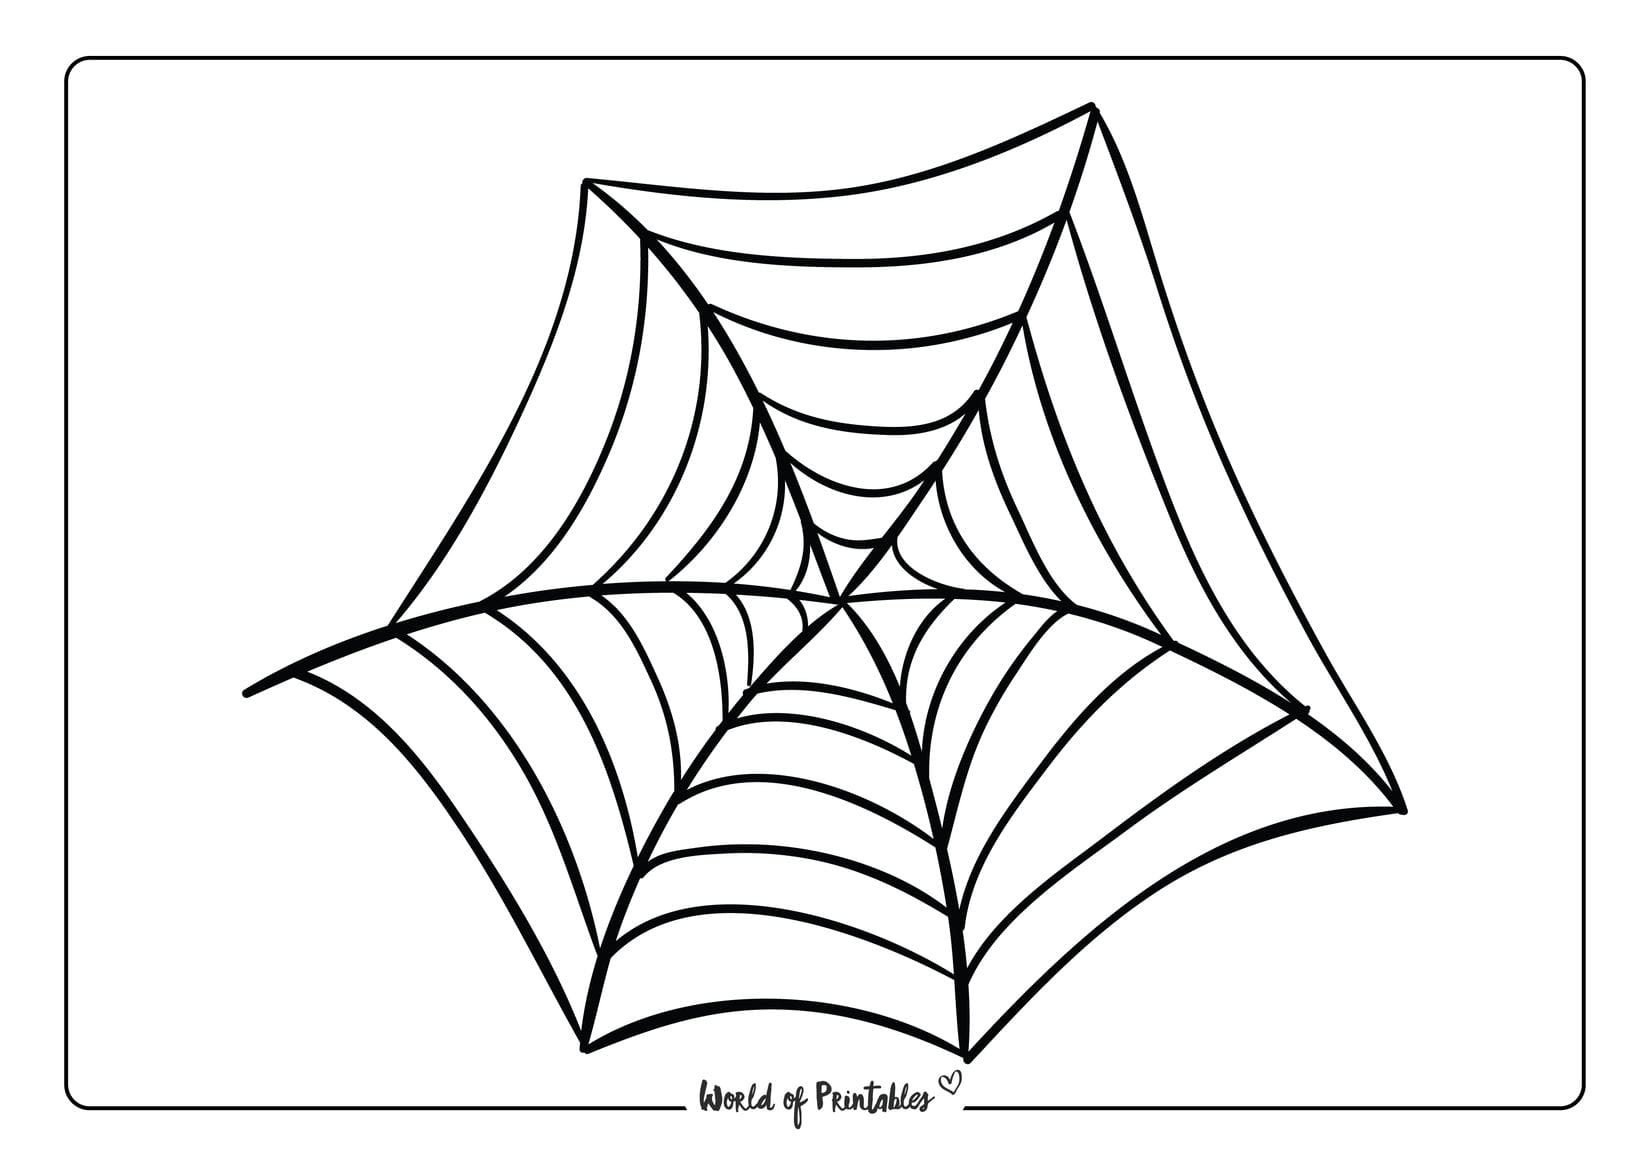 Spiderweb printables